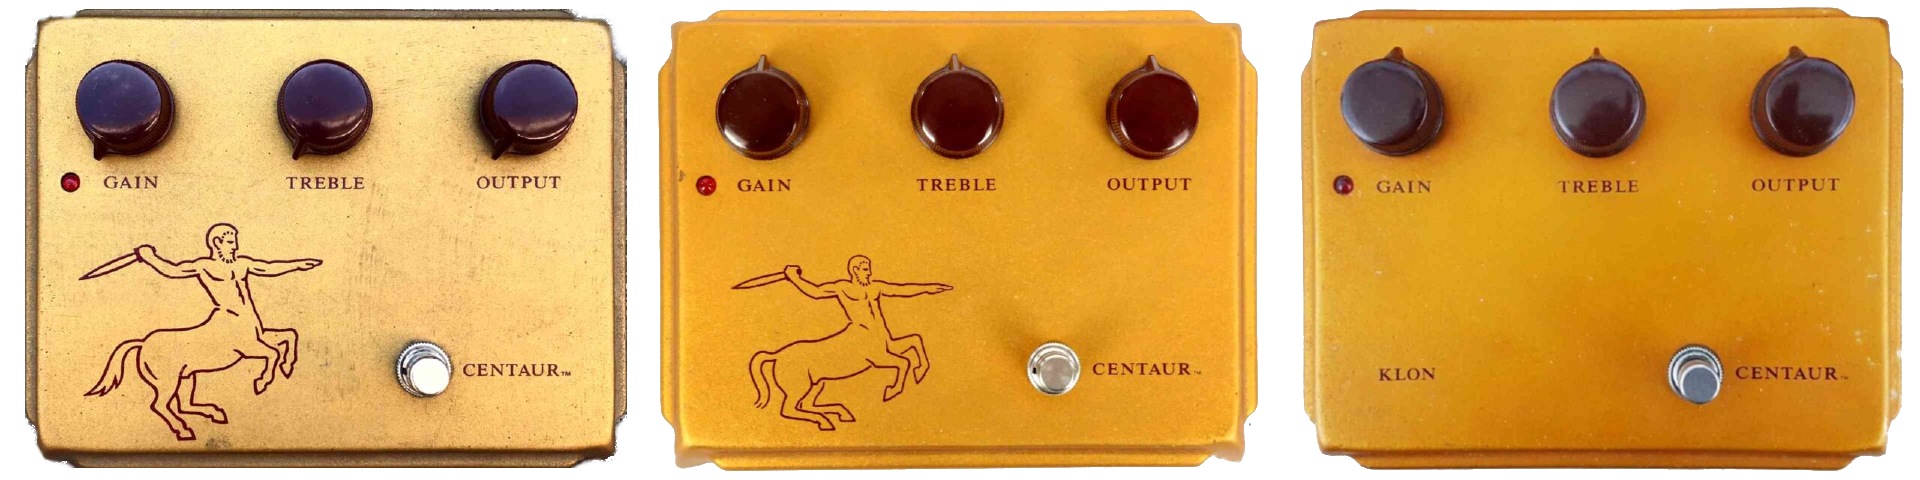 The Klon Centaur Guide – Decibelics